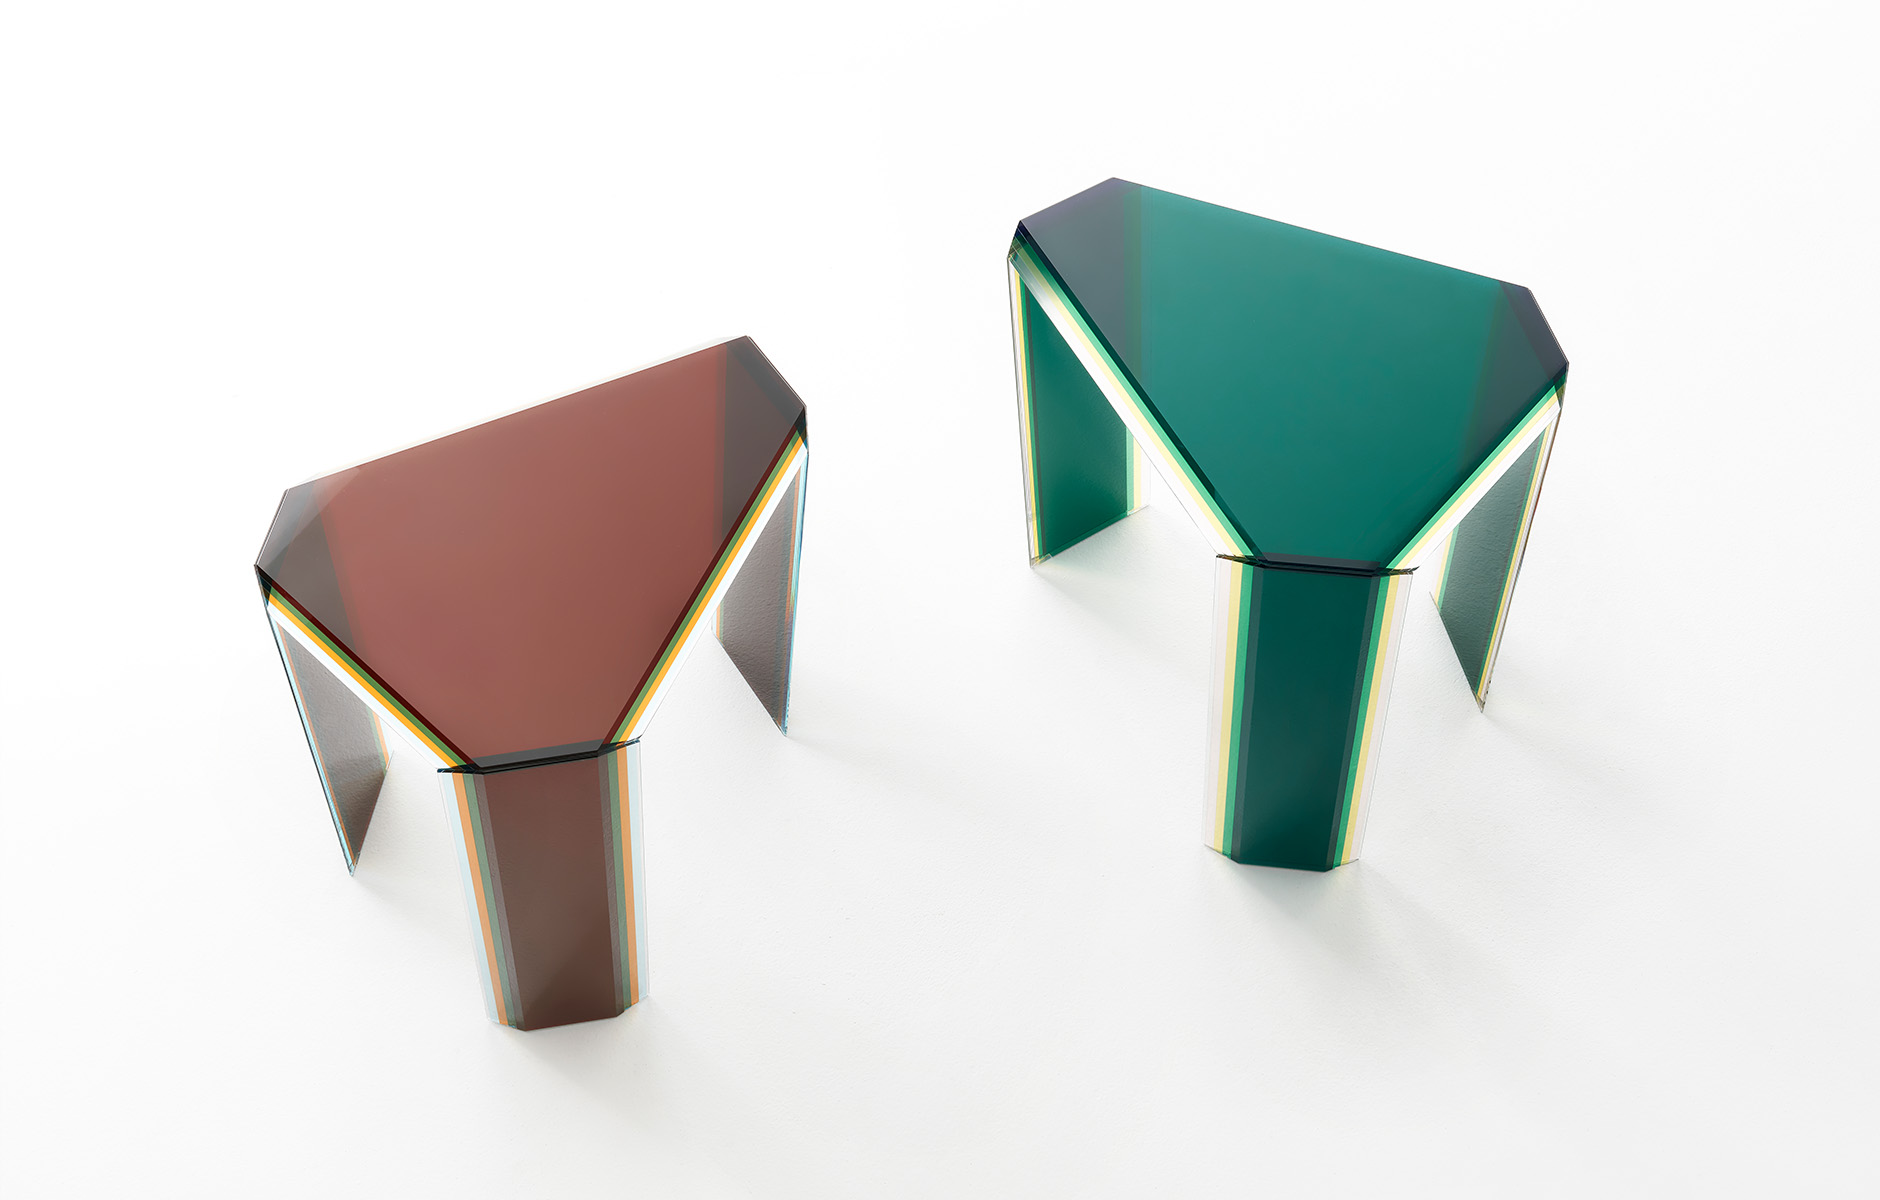 Bisel low tables designed by Patricia Urquiola for Glas Italia. Photo c/o Glas Italia.